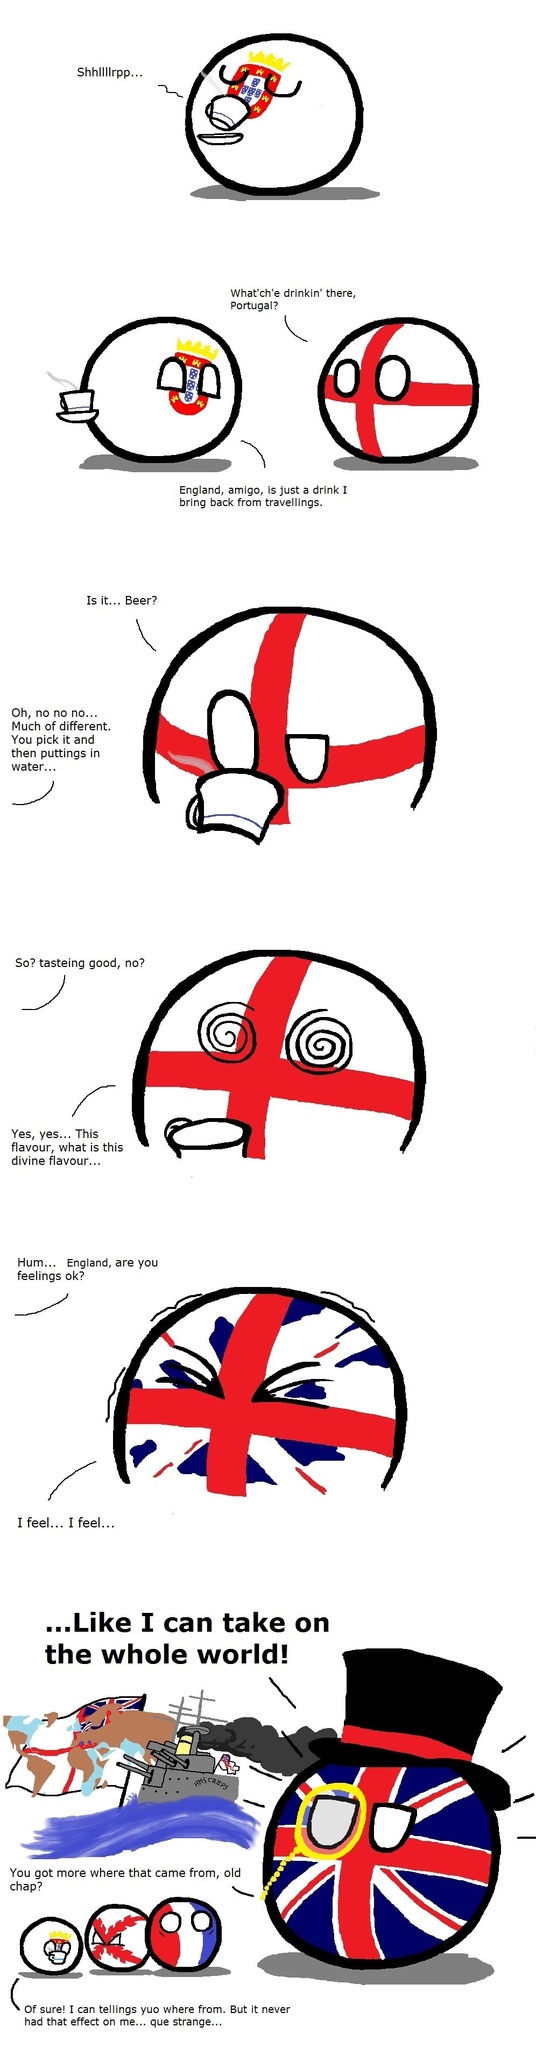 brits are morons - meme